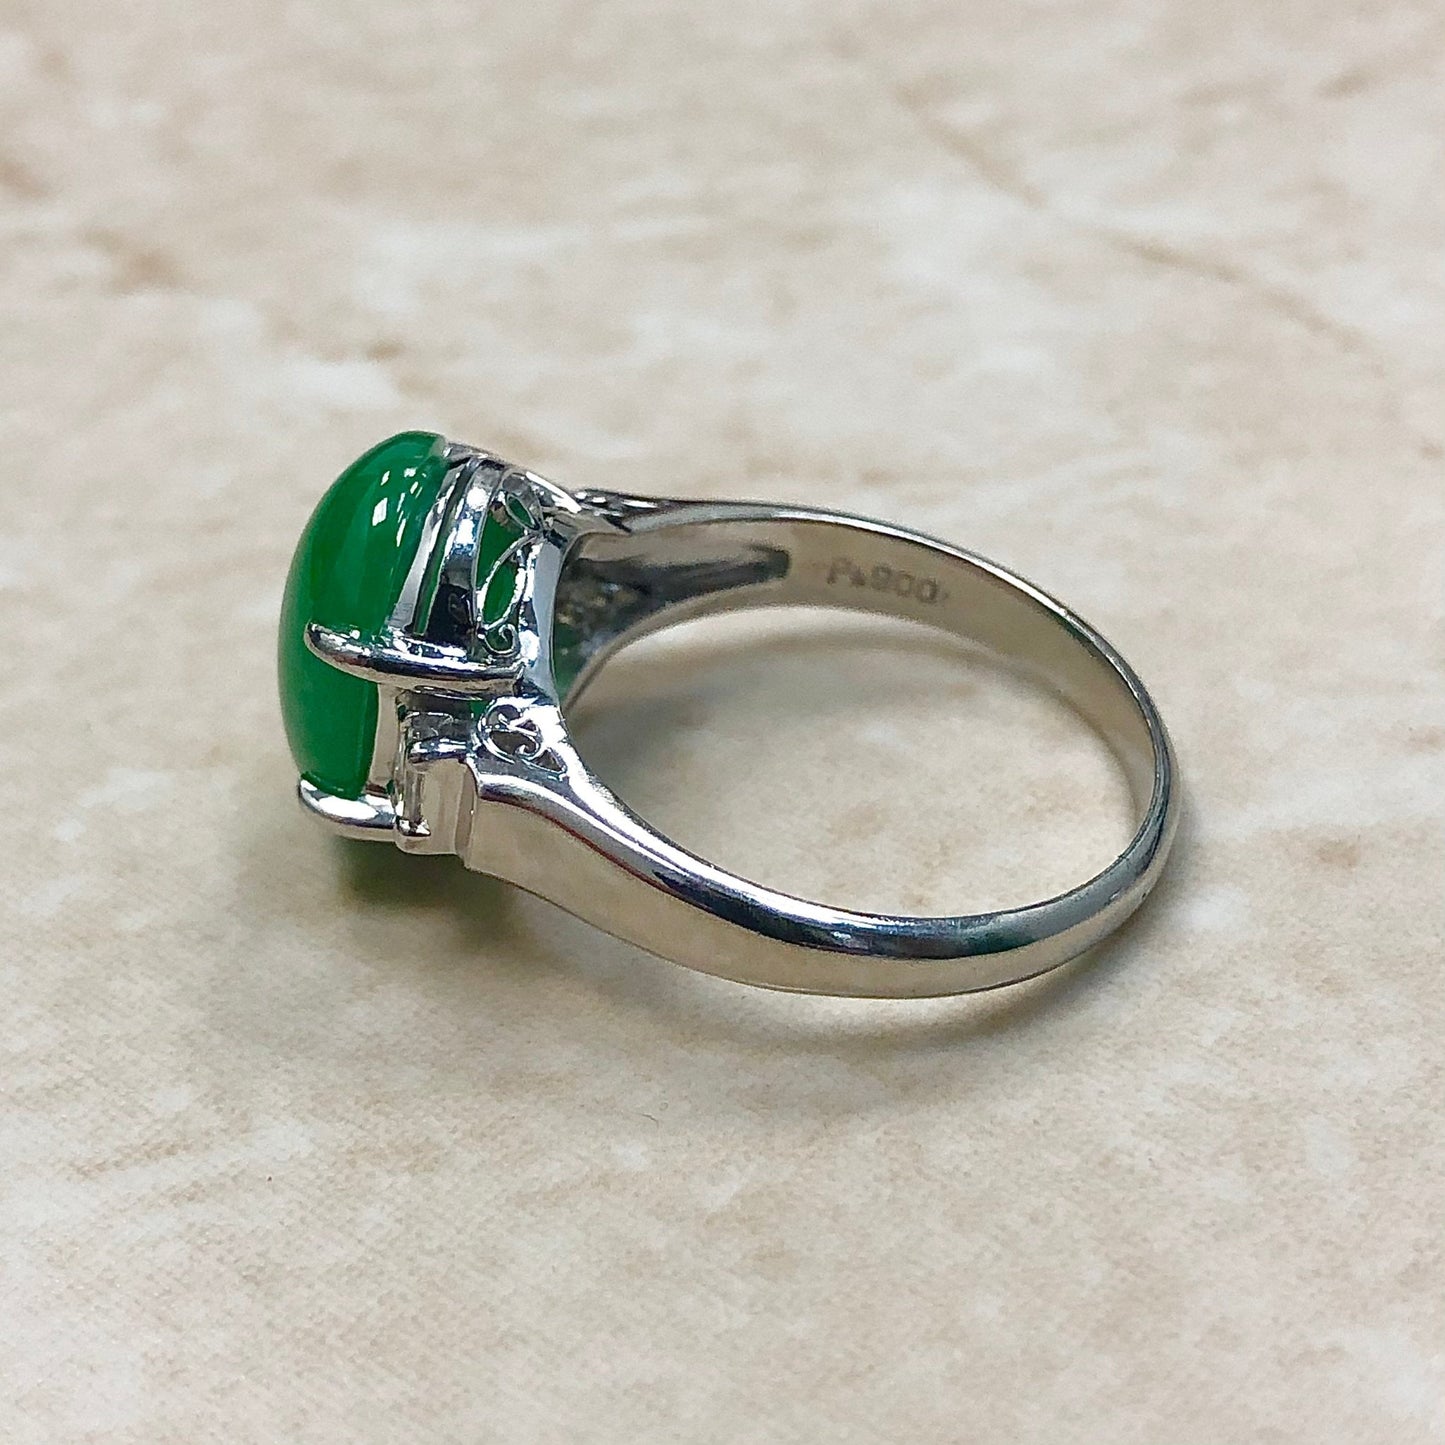 Fine Platinum Natural Jadeite And Diamond Cocktail Ring - Jade Ring - Size 7.25 - Birthday Gift